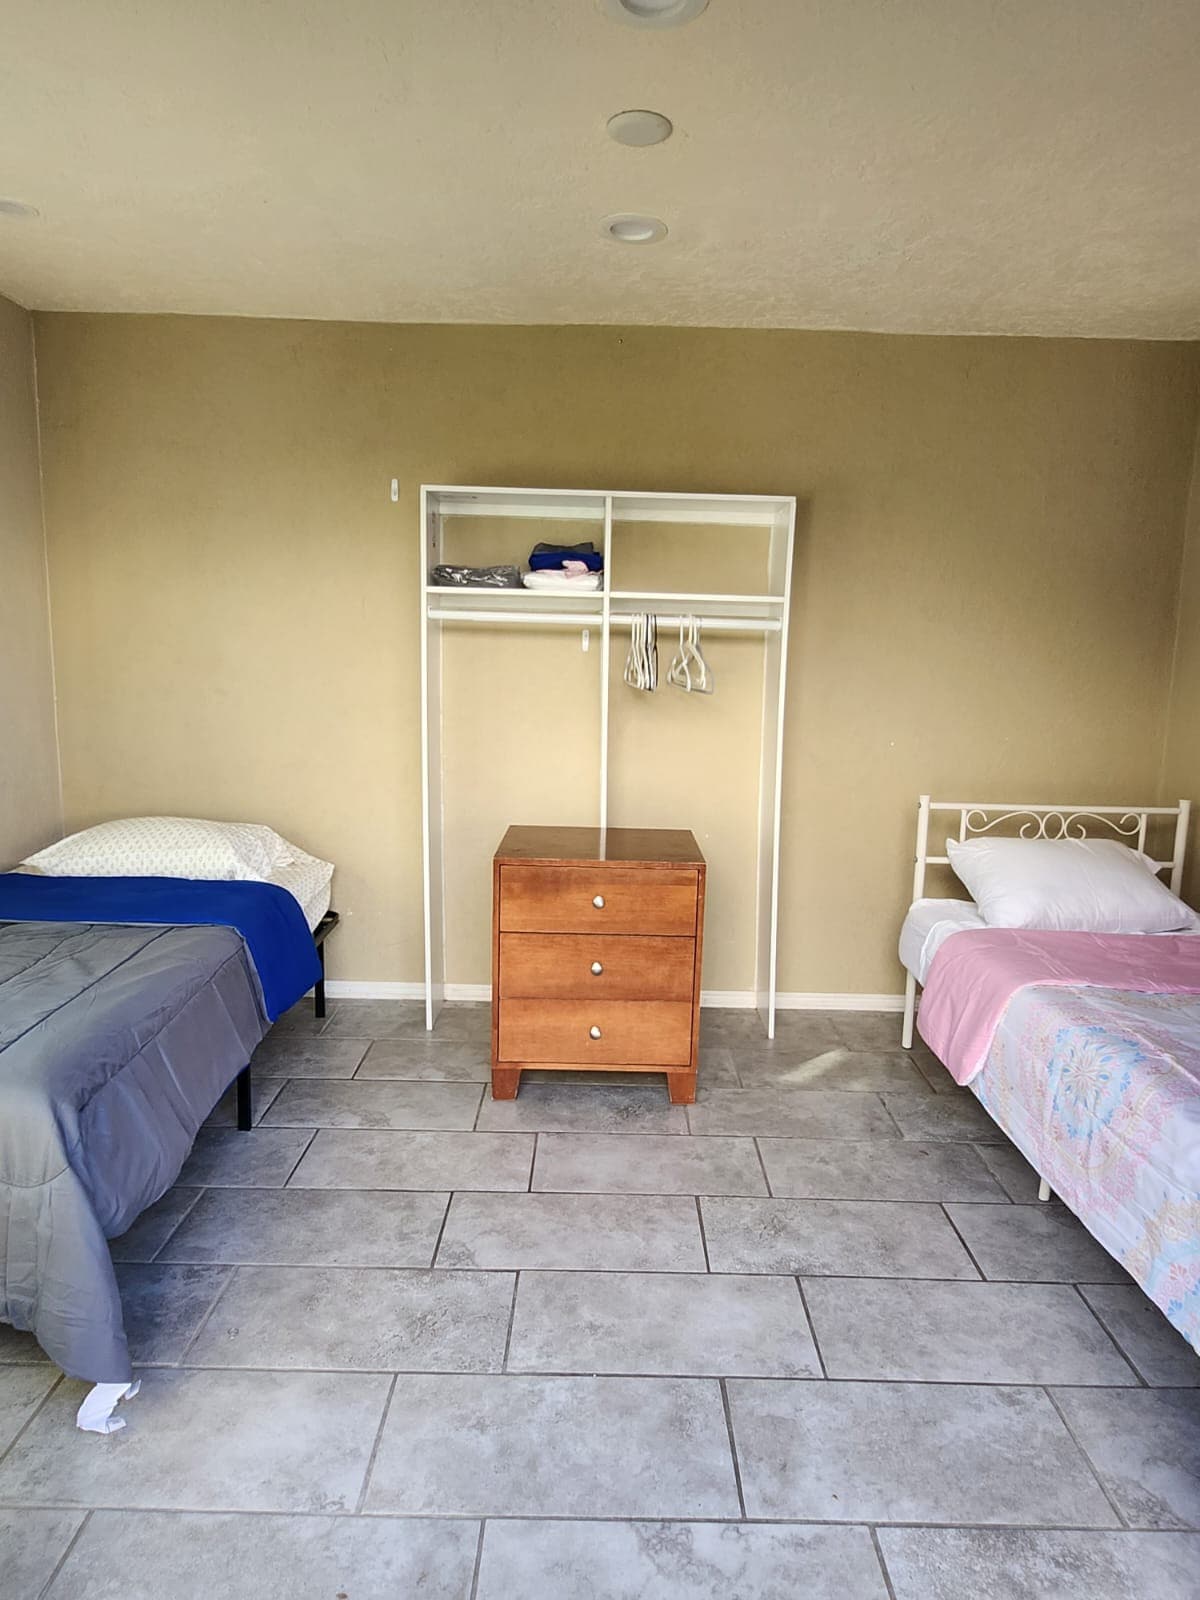 2 Guest Bedroom In South Phoenix